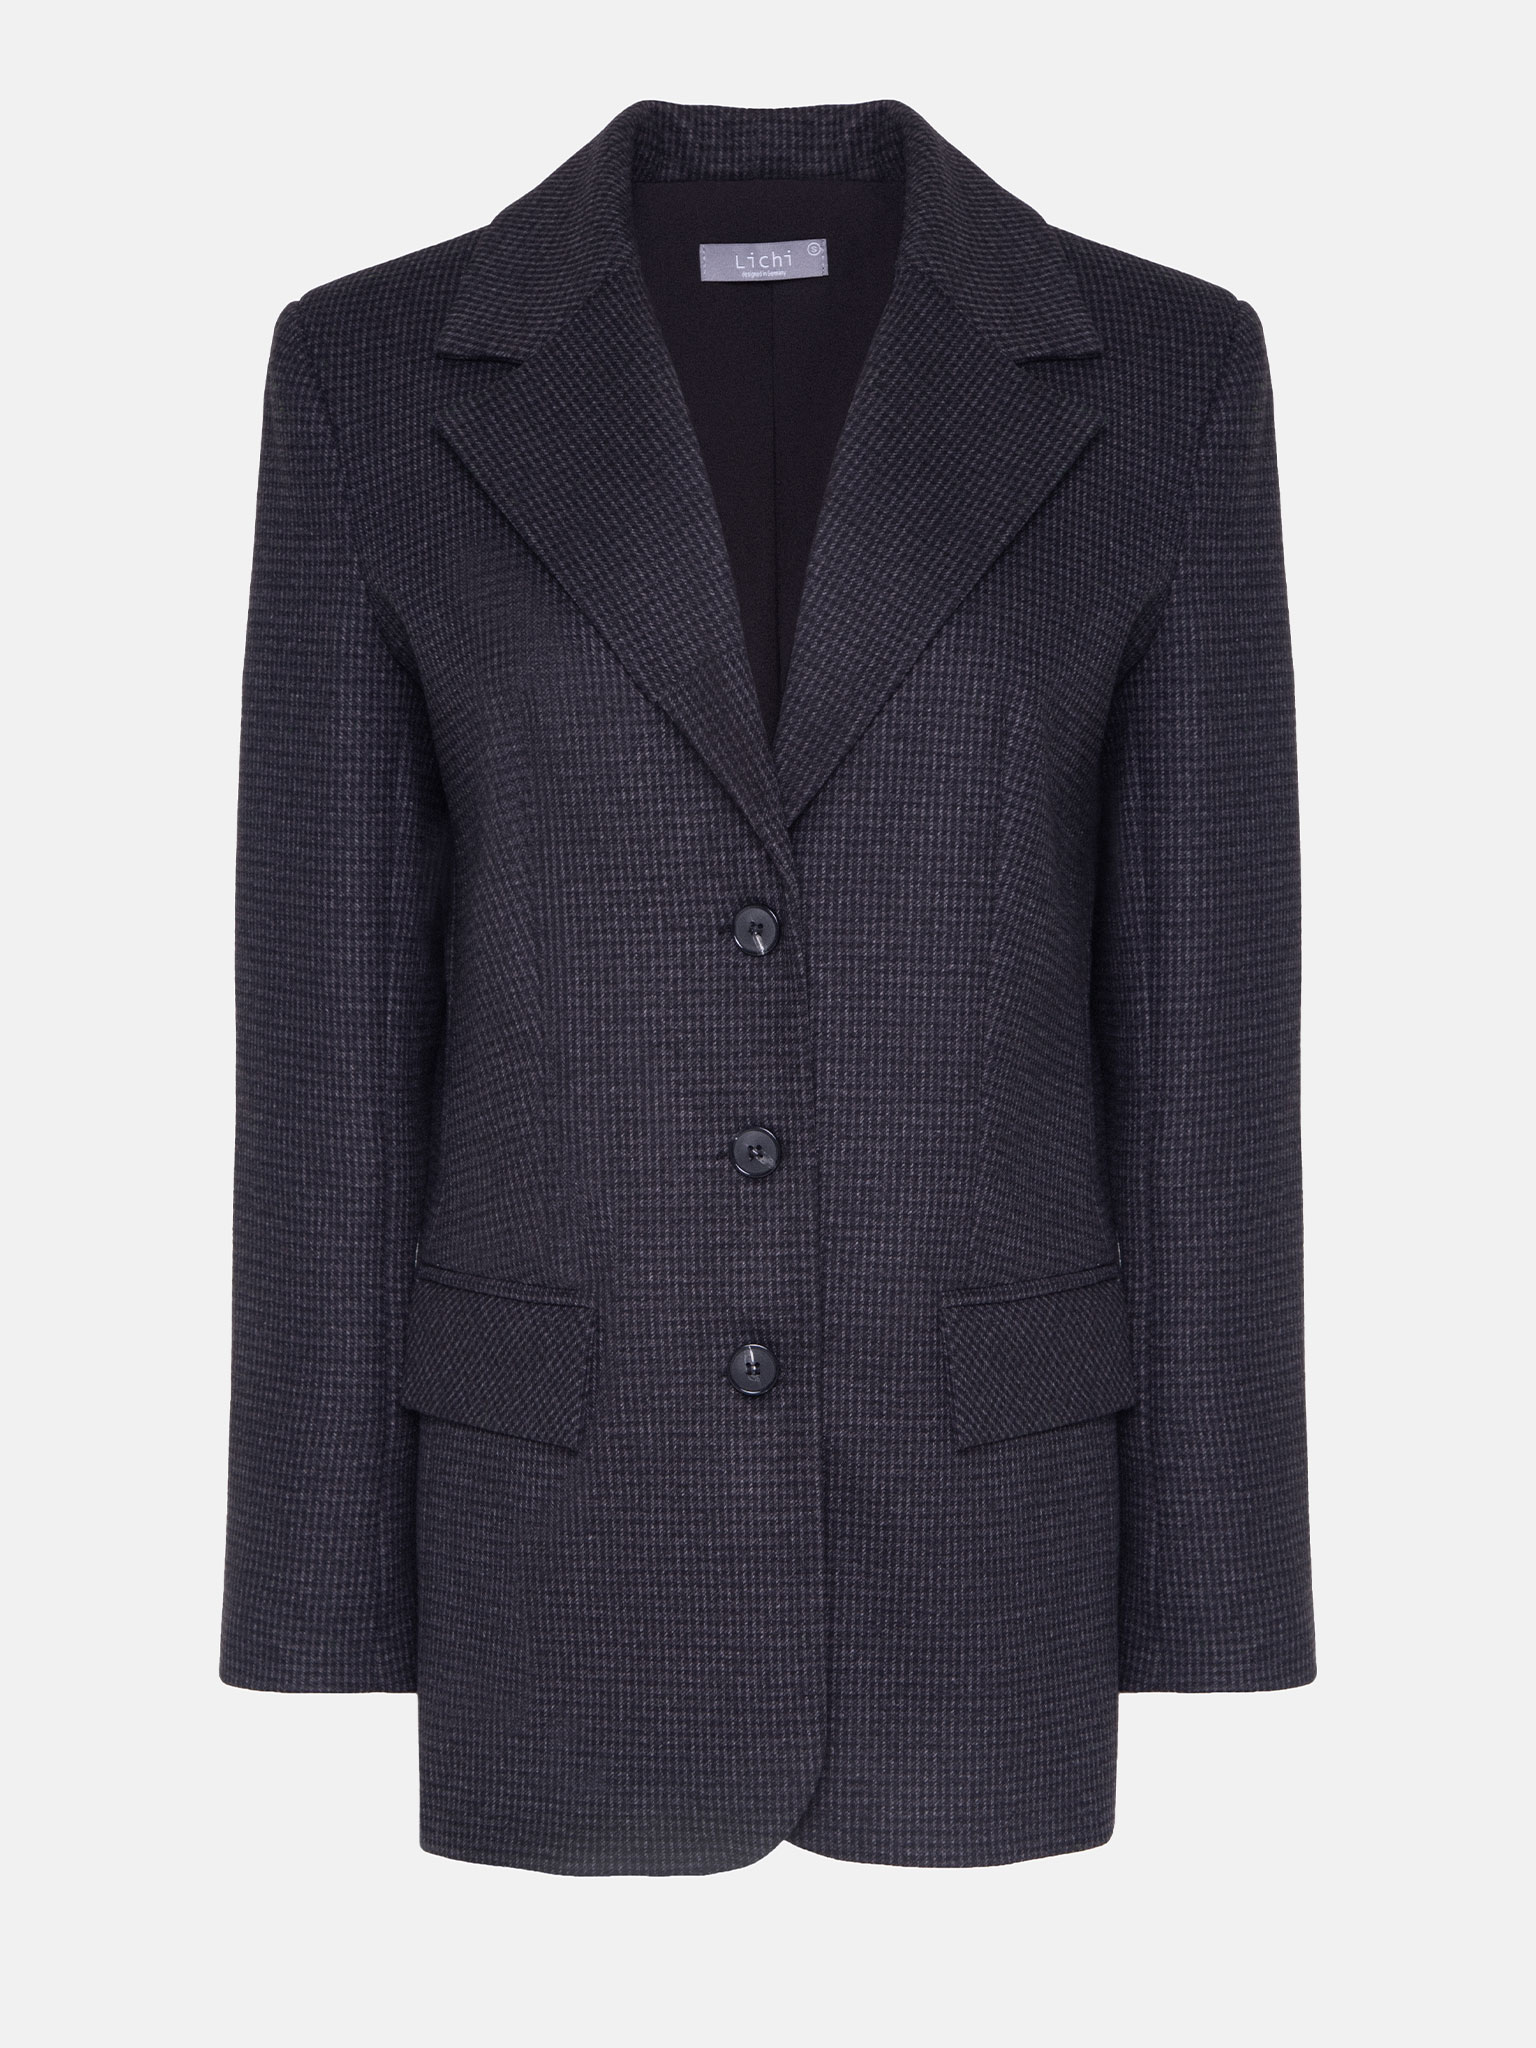 Long three-button blazer :: LICHI - Online fashion store